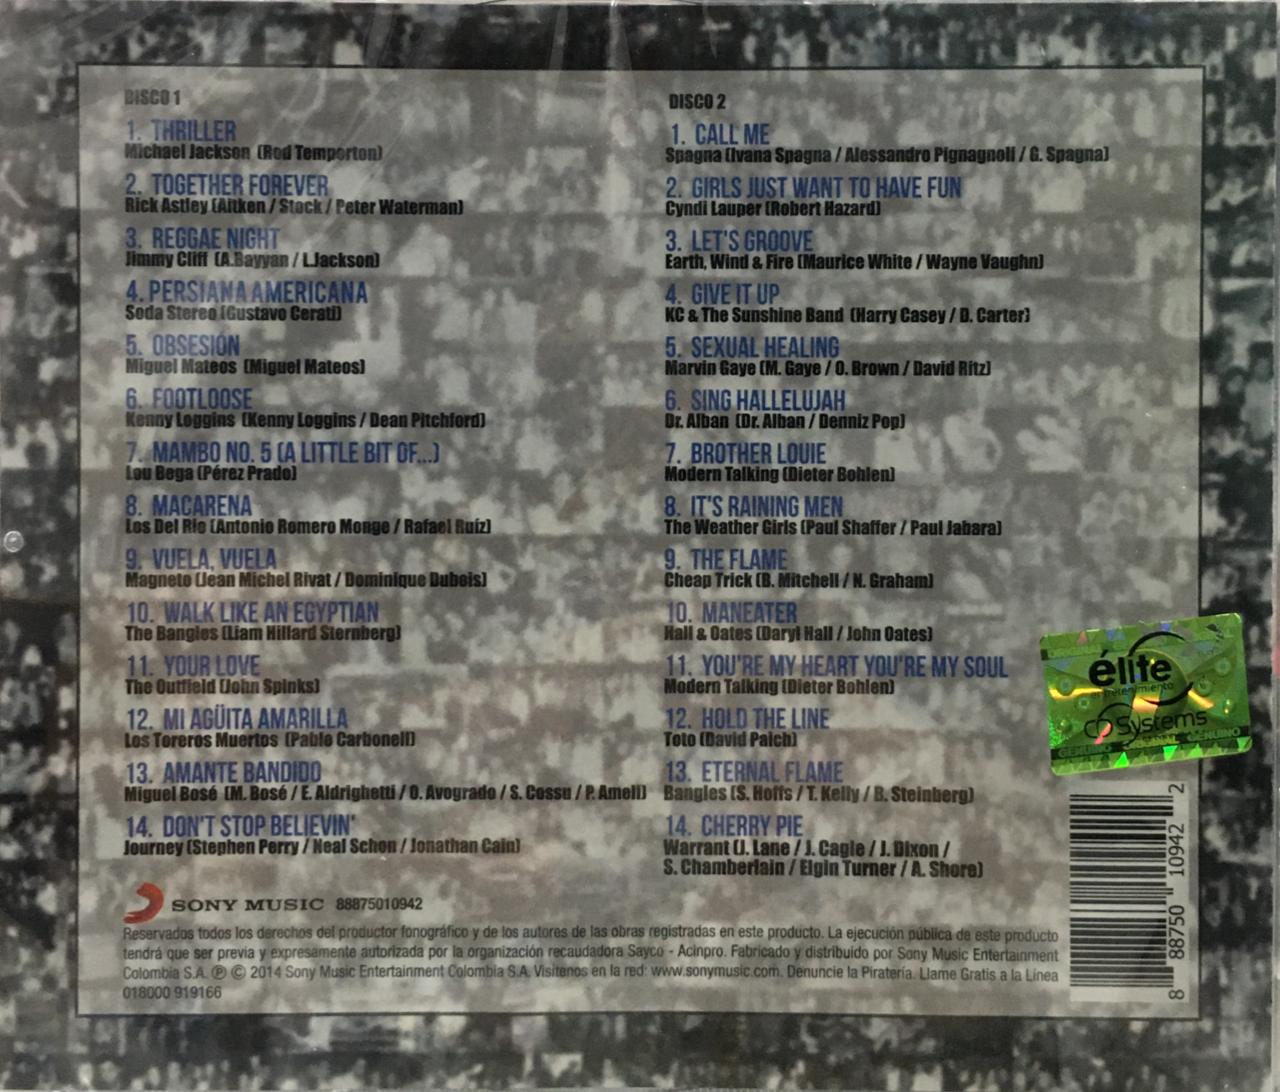 CD x2 La noches de full 80 's - Sony Music